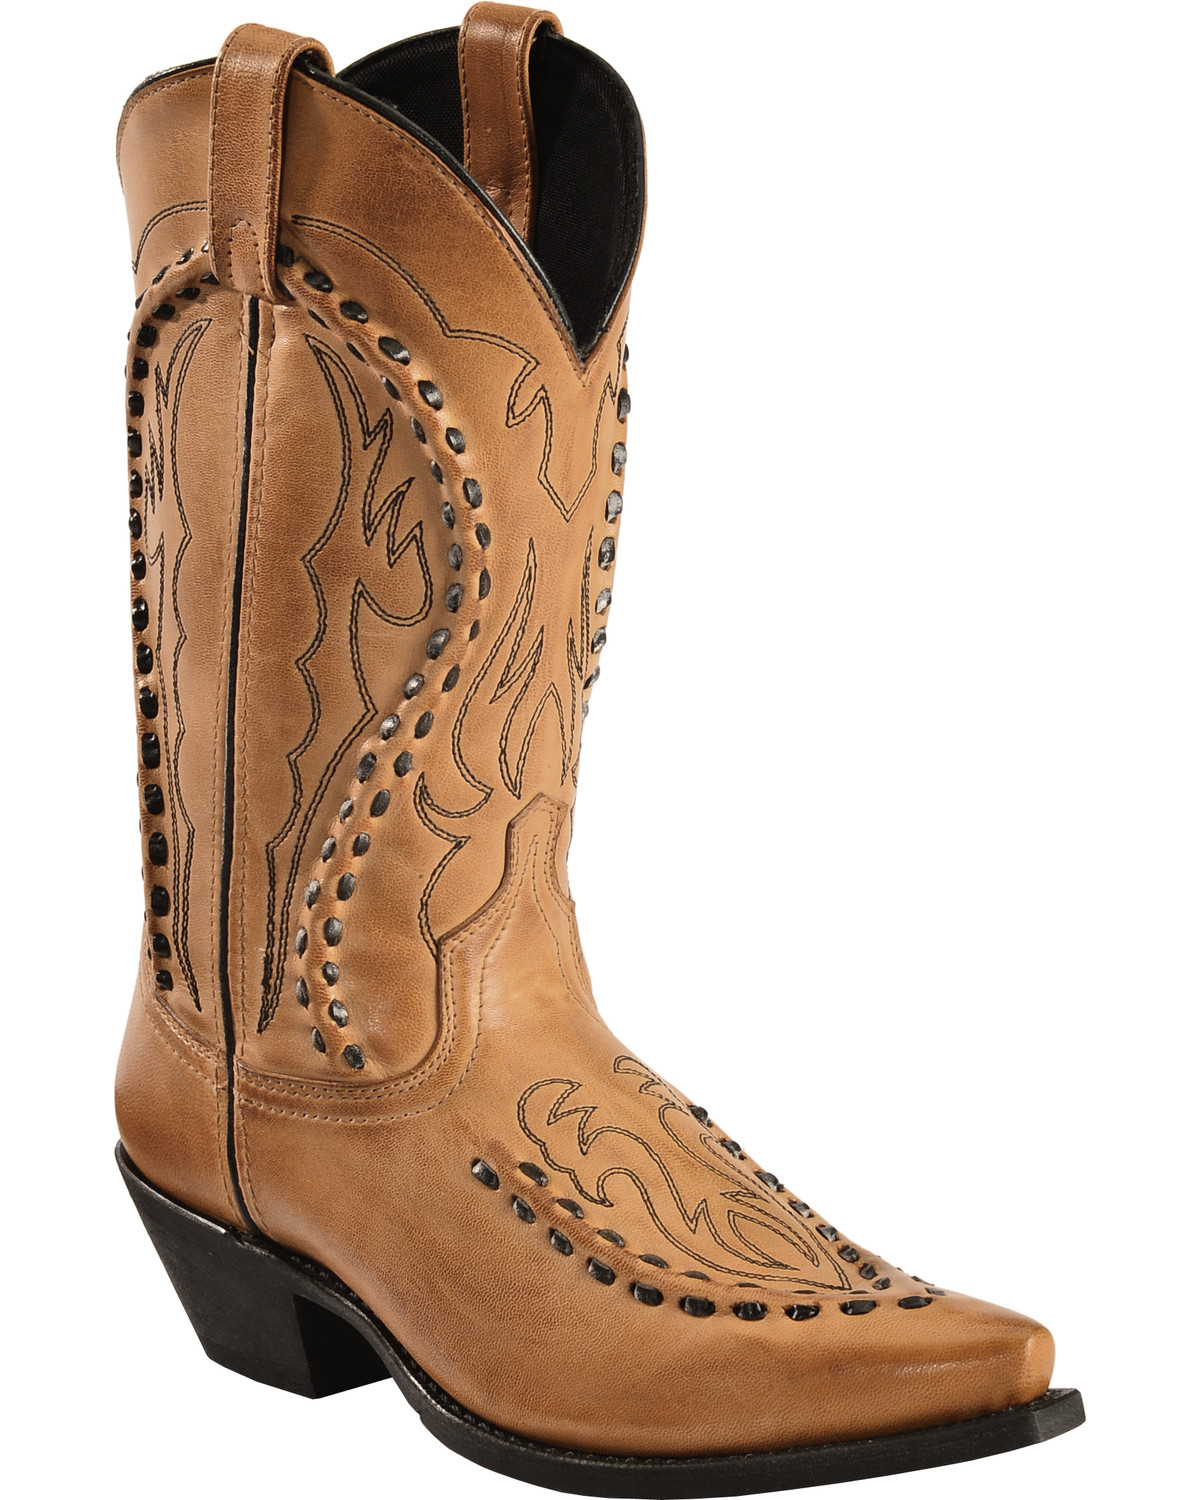 Laredo Men's Laramie Snip Toe Western Boots